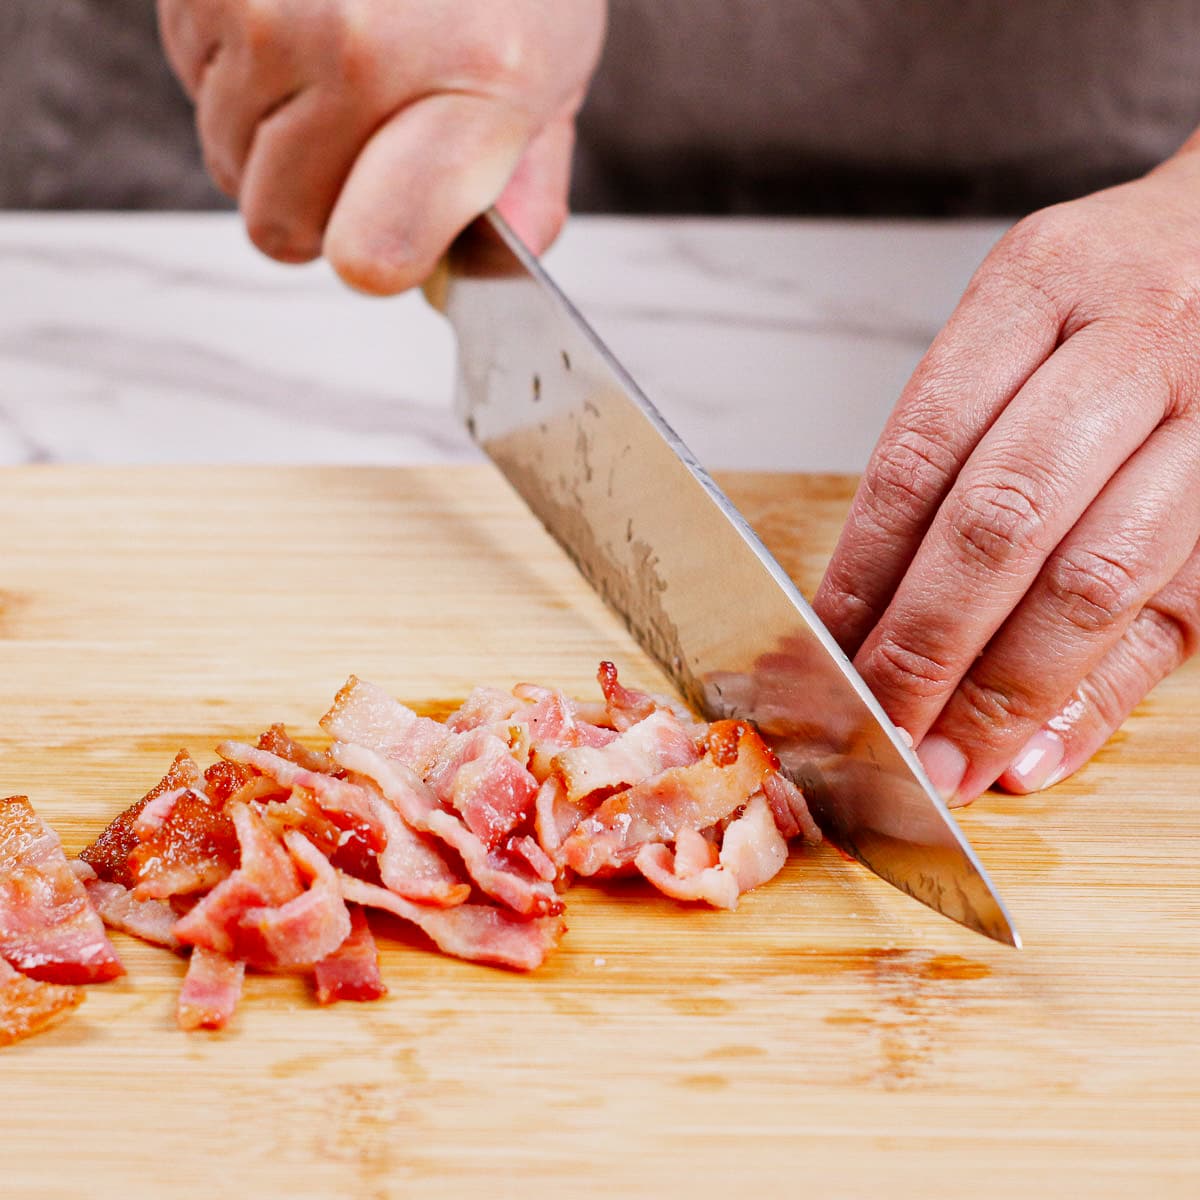 Chopping bacon into small strips